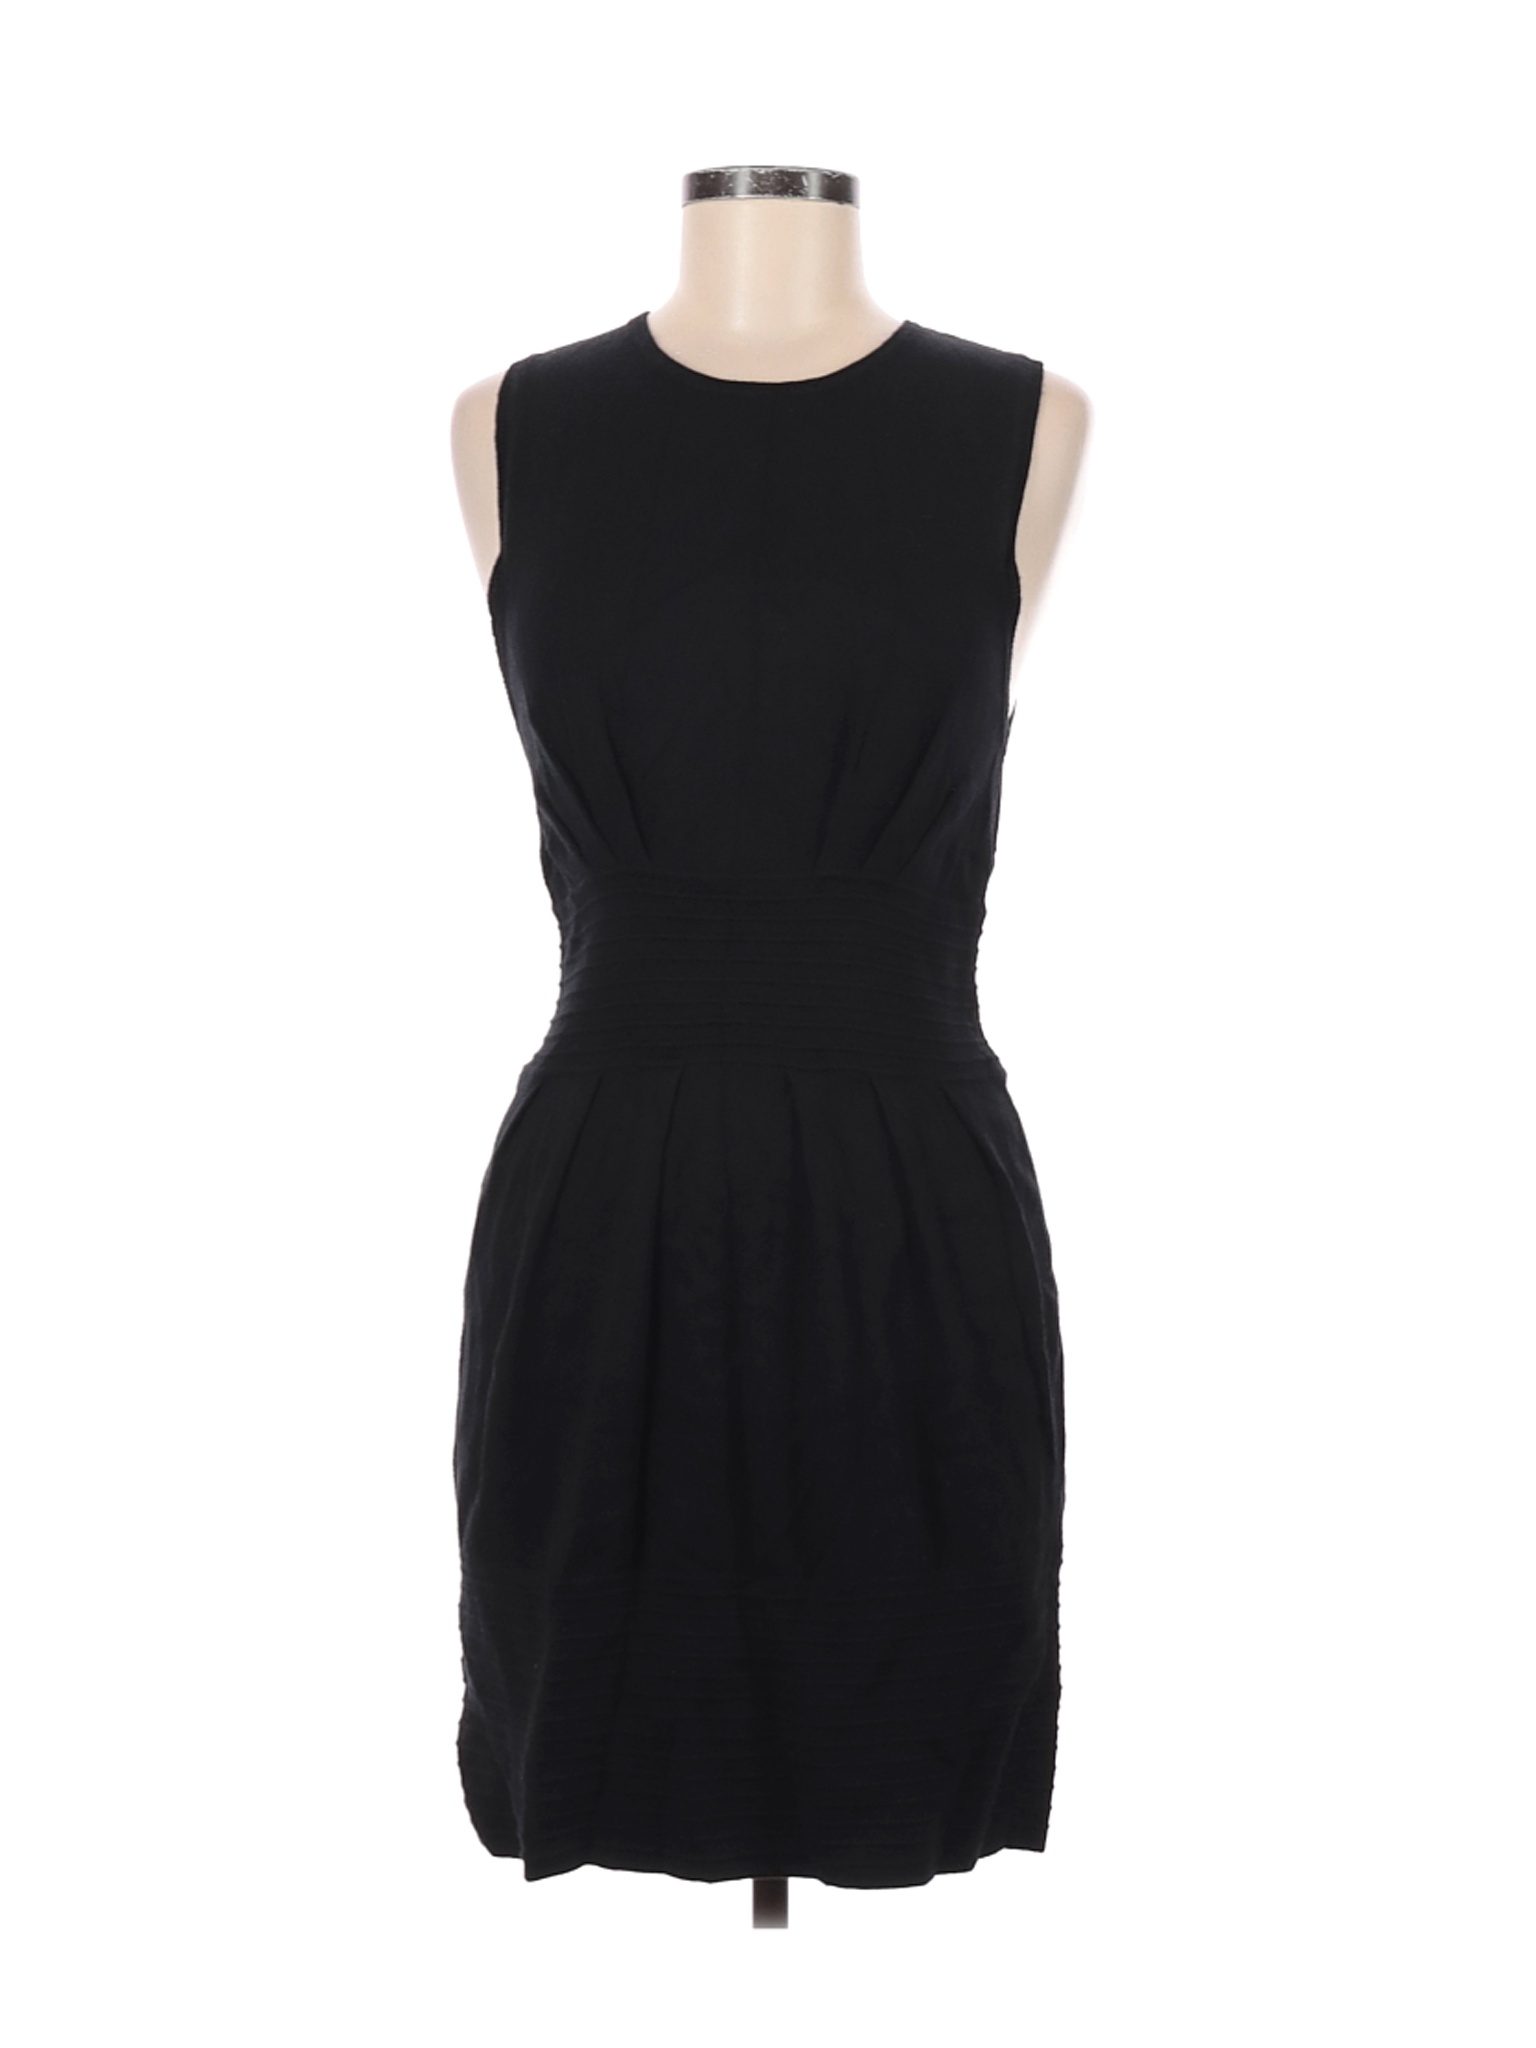 Banana Republic Factory Store Women Black Casual Dress 8 | eBay